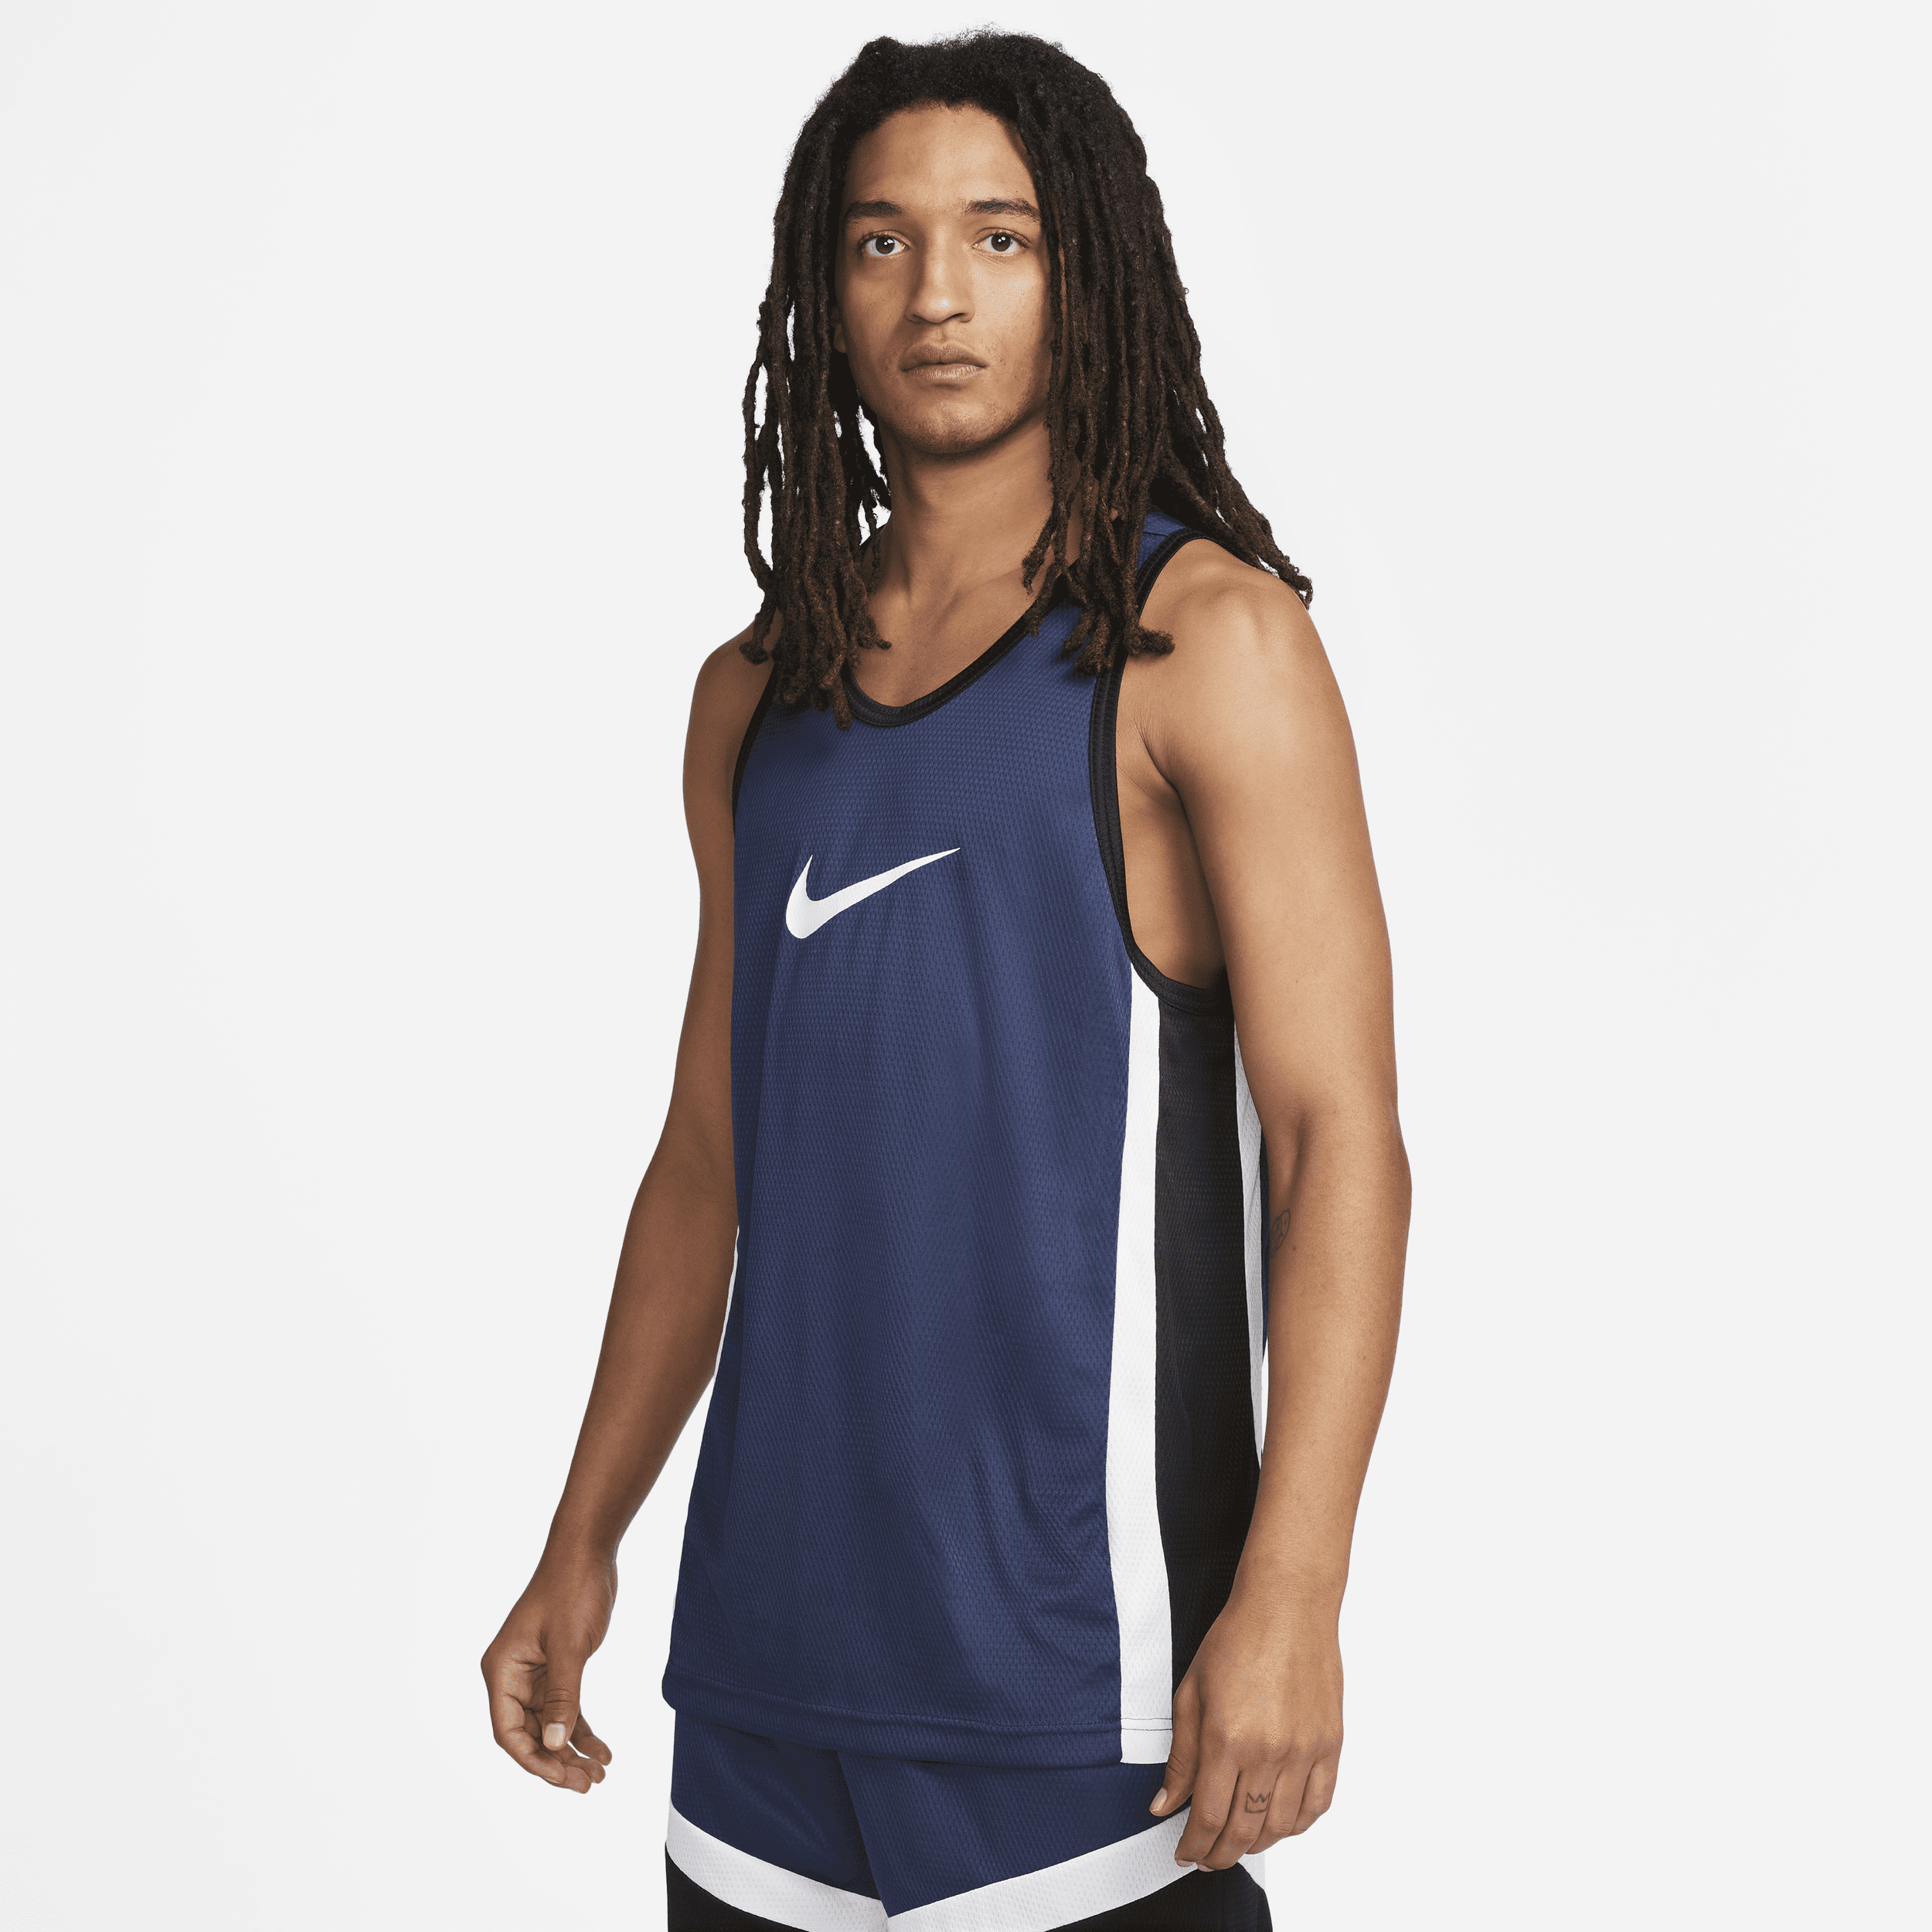 Nike Icon Dri-FIT basketbaljersey voor heren - Blauw